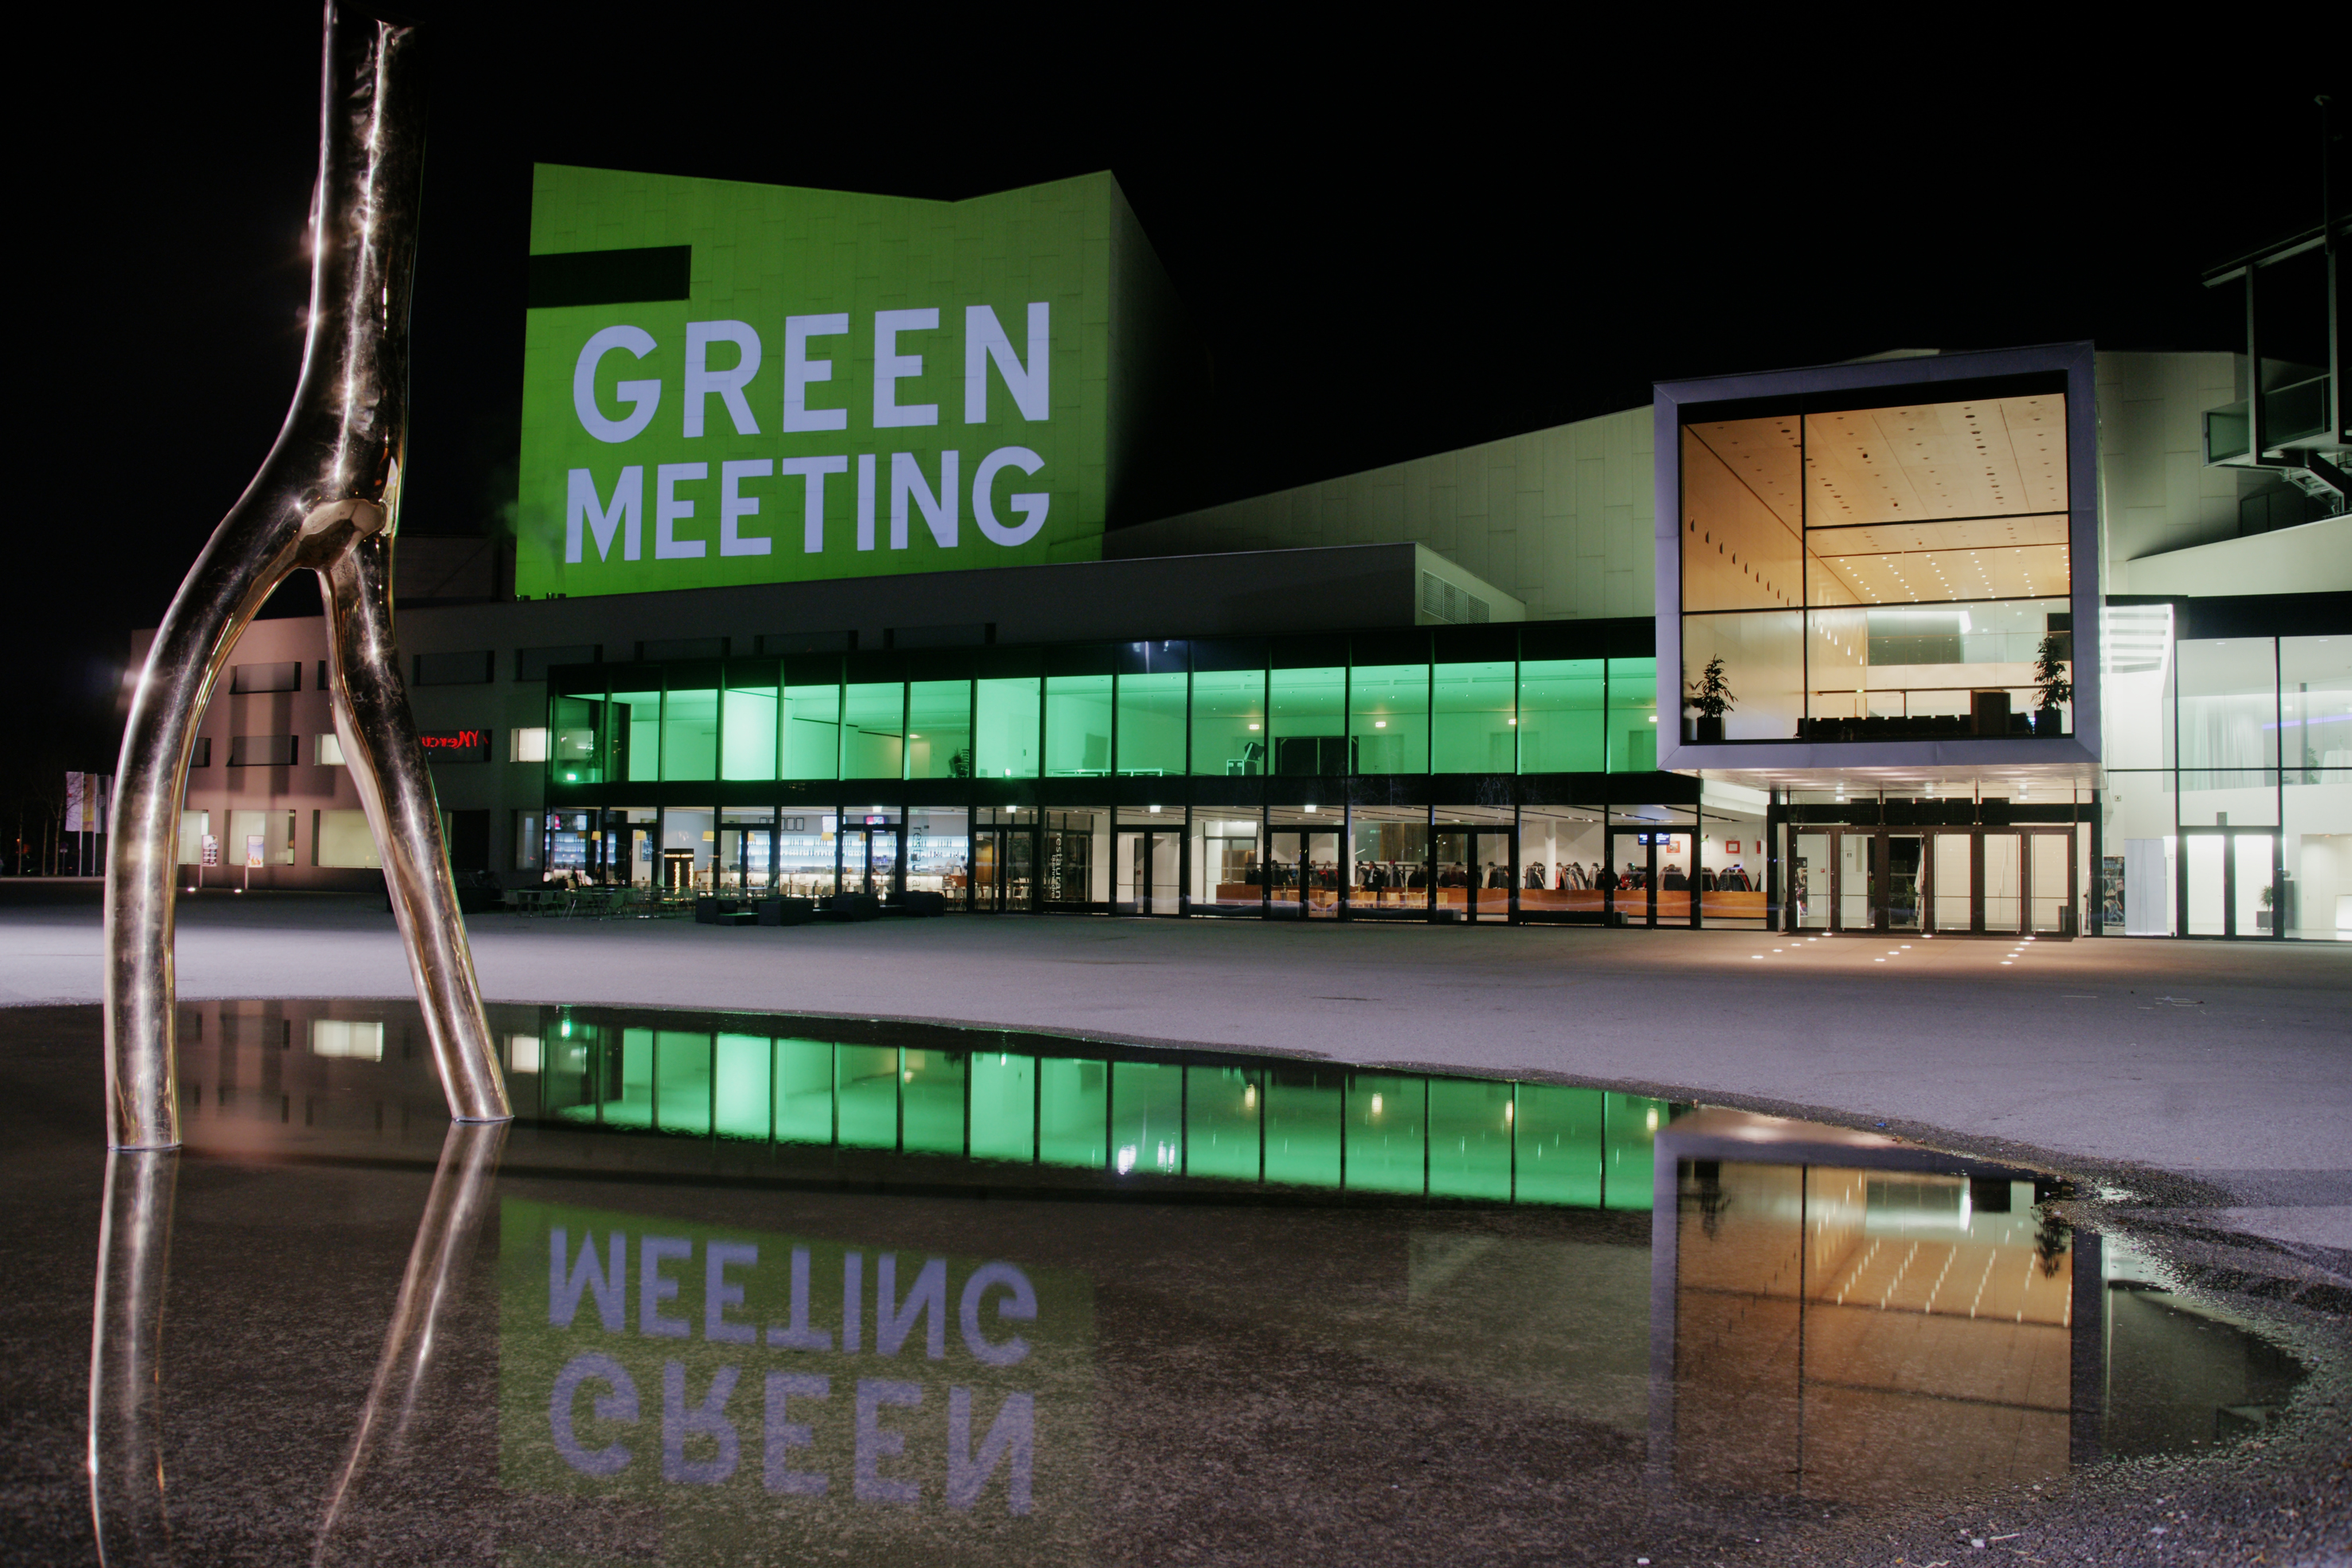 Green Meeting und Green Events